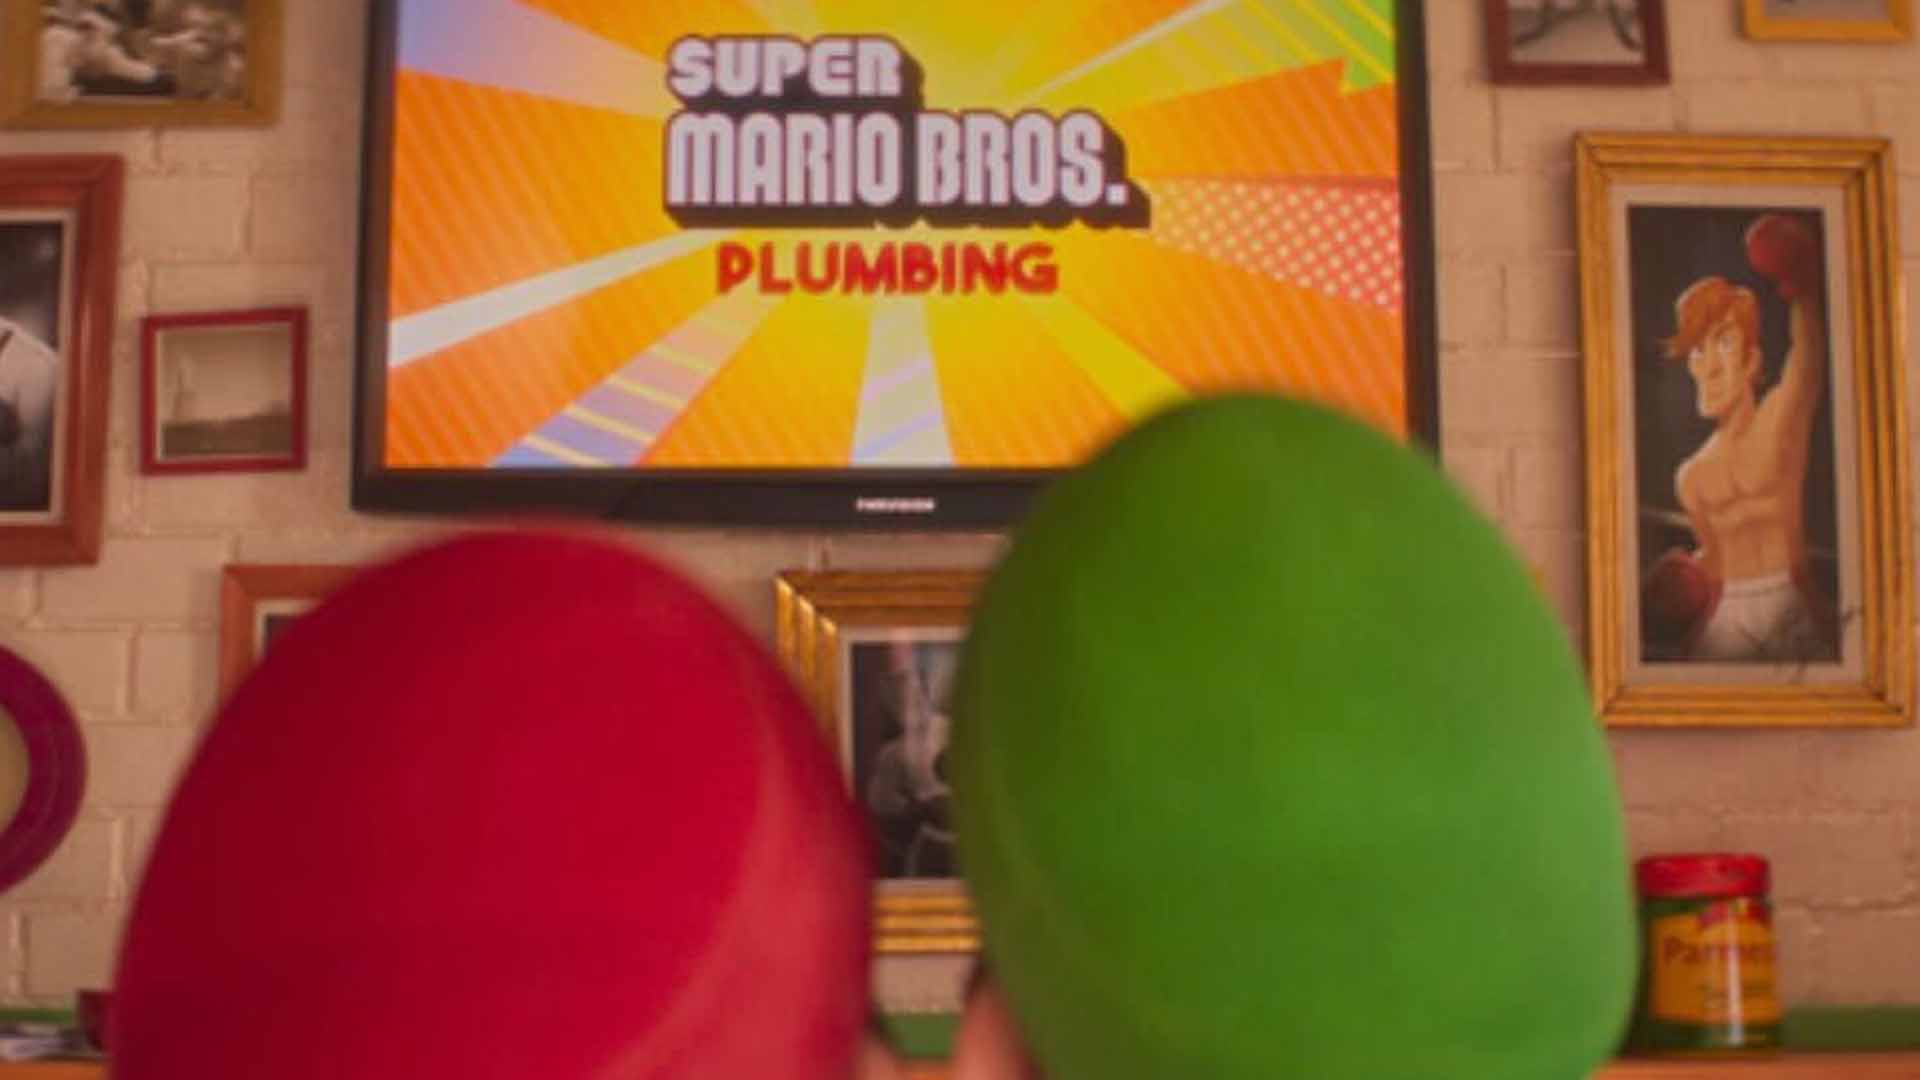 Super Mario Bros. Movie images show off Nintendo easter eggs – Nintendo Wire